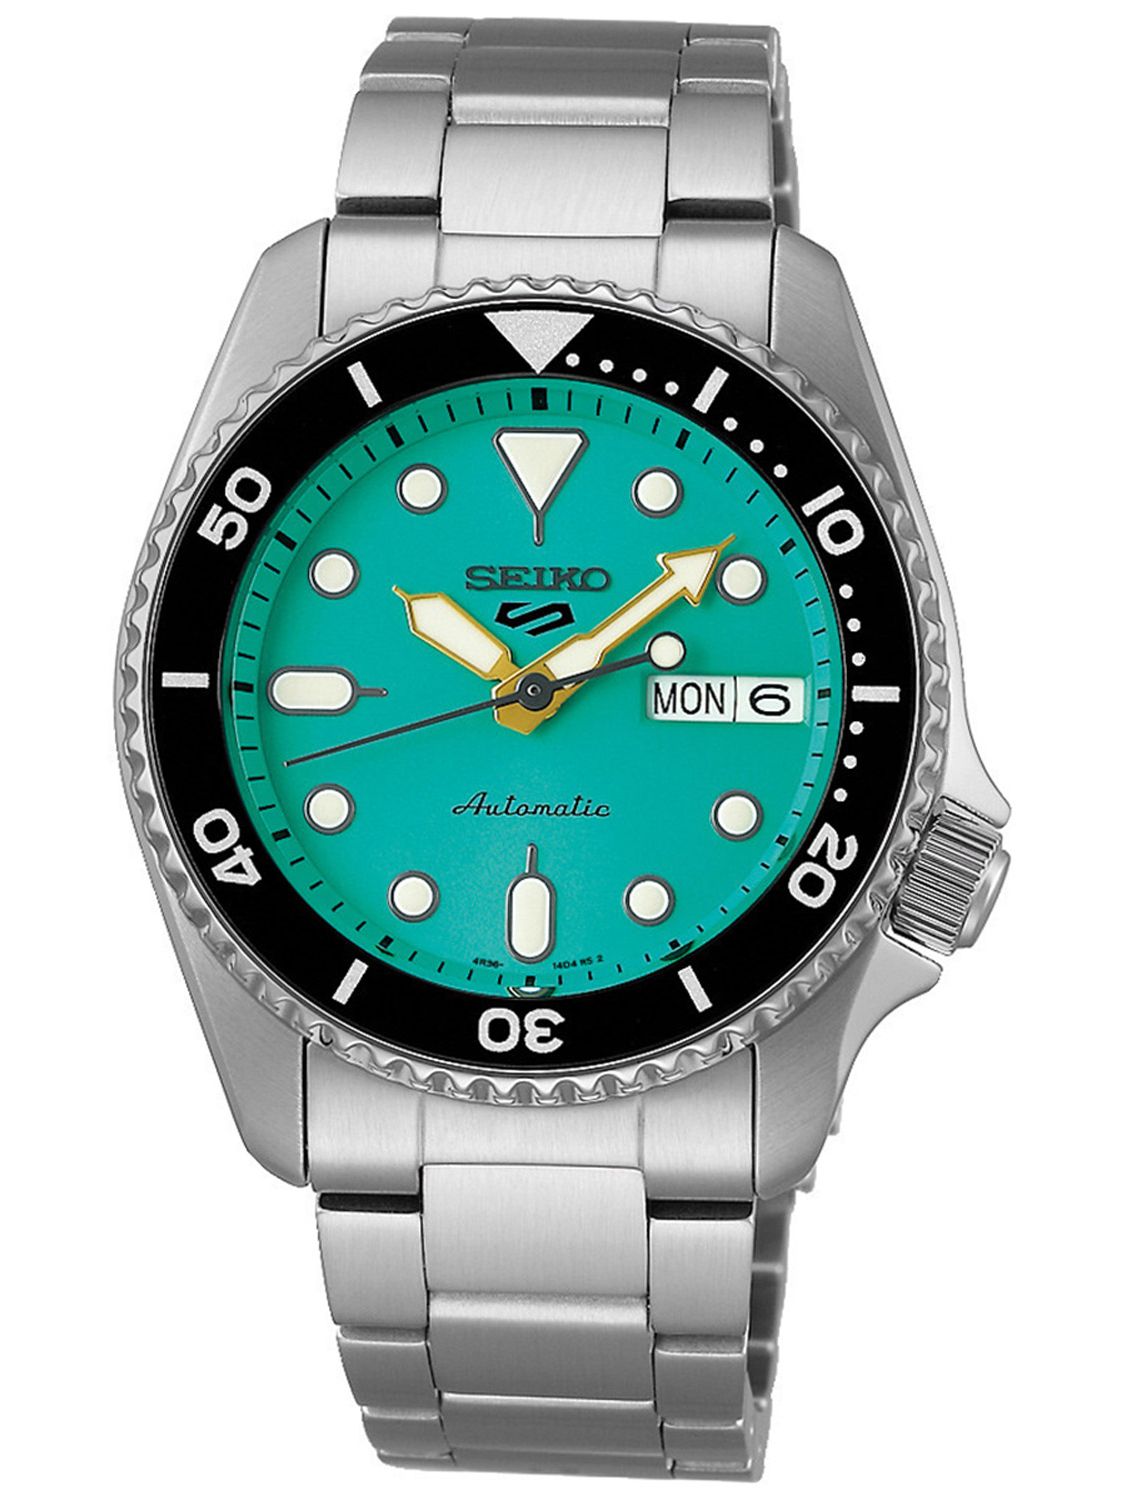 Seiko 5 Sports Unisex Automatic Watch Steel/Turquoise SRPK33K1 • uhrcenter